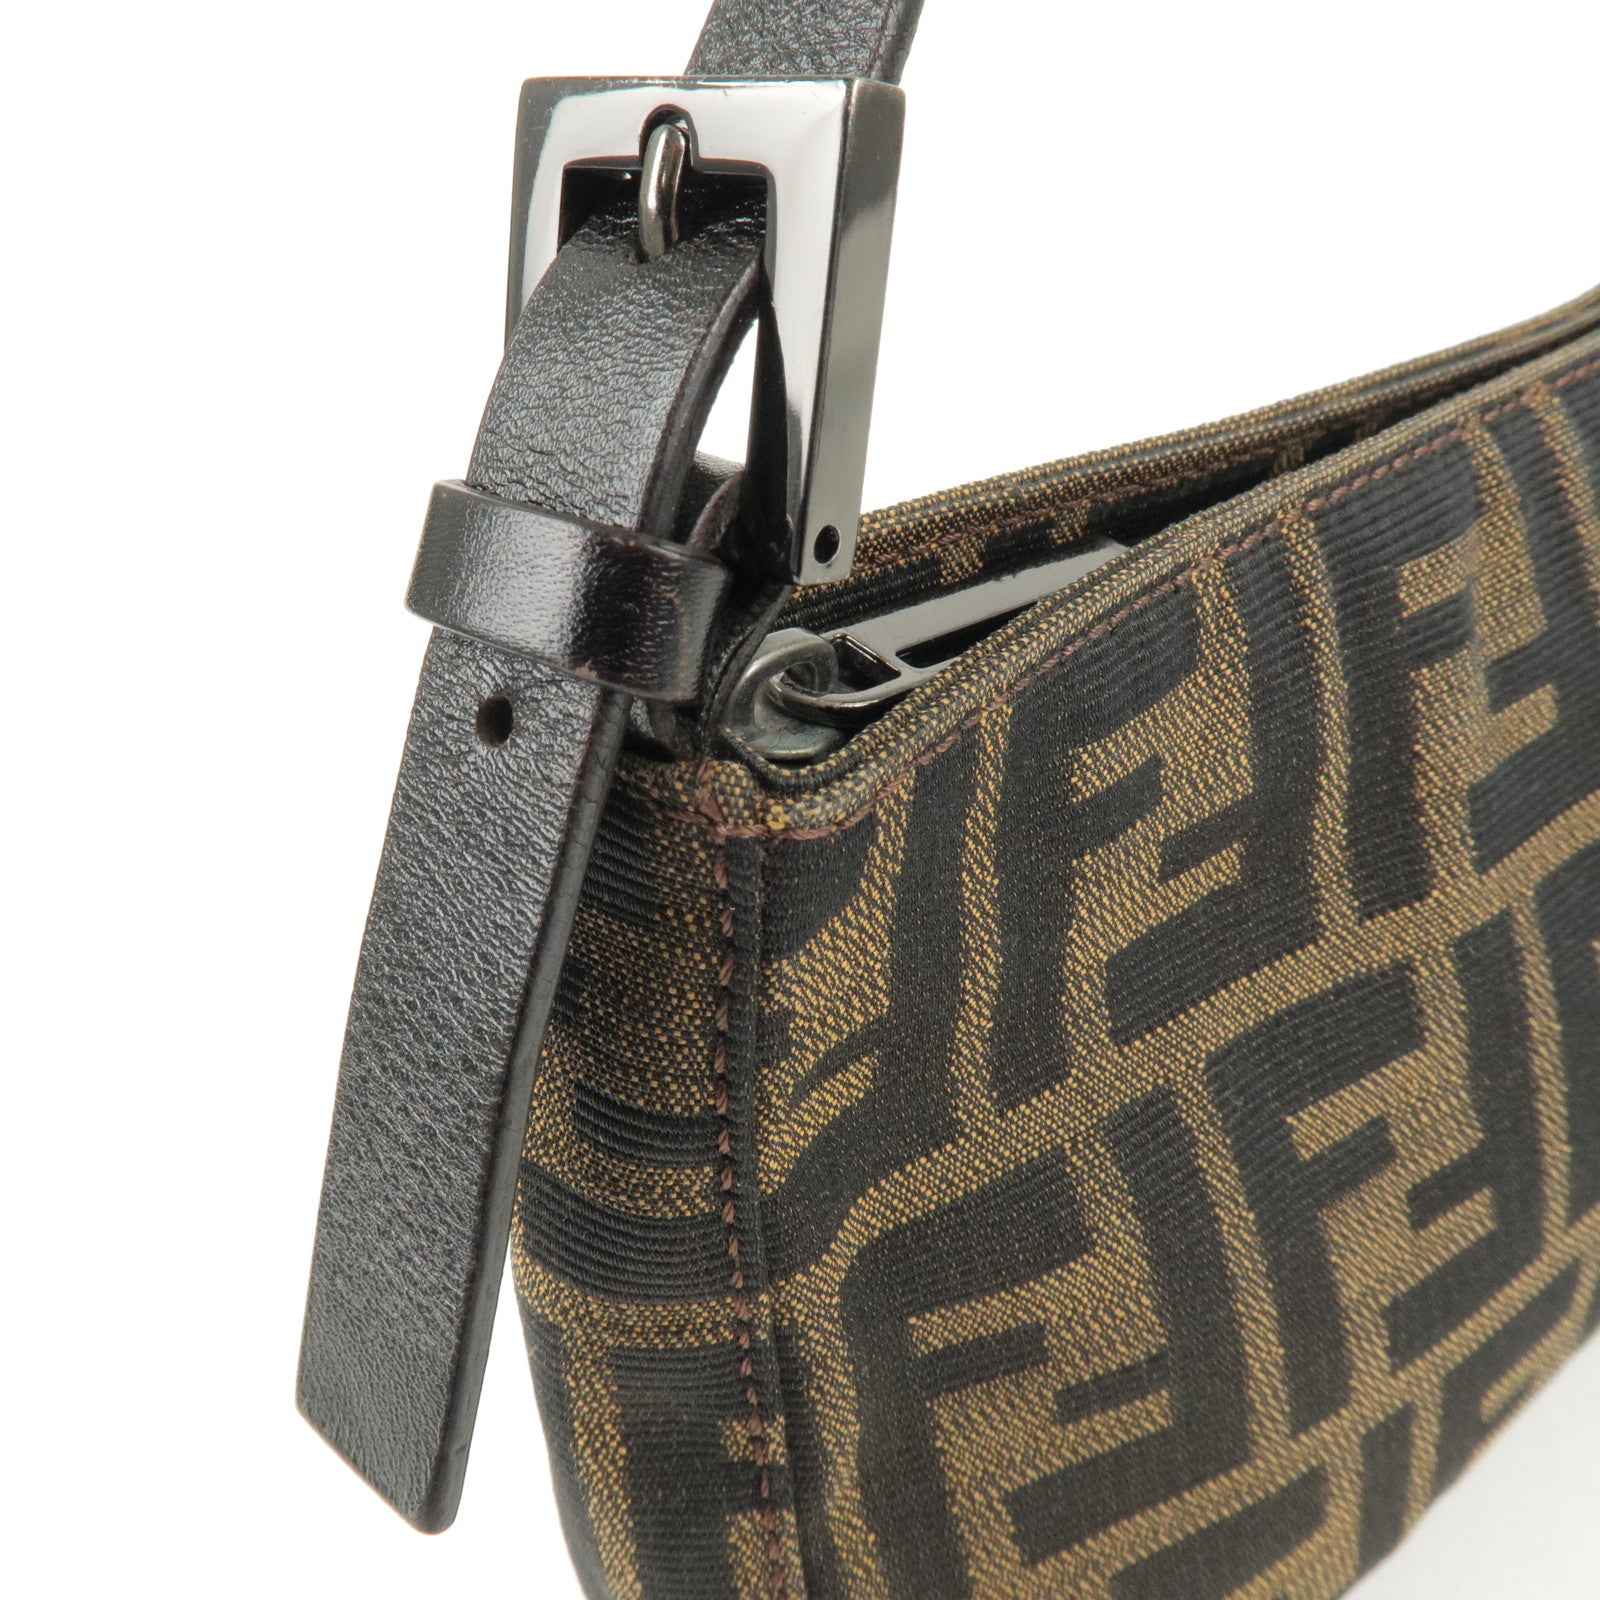 8BS019 Zucca Coated Canvas Camera Bag – Keeks Designer Handbags